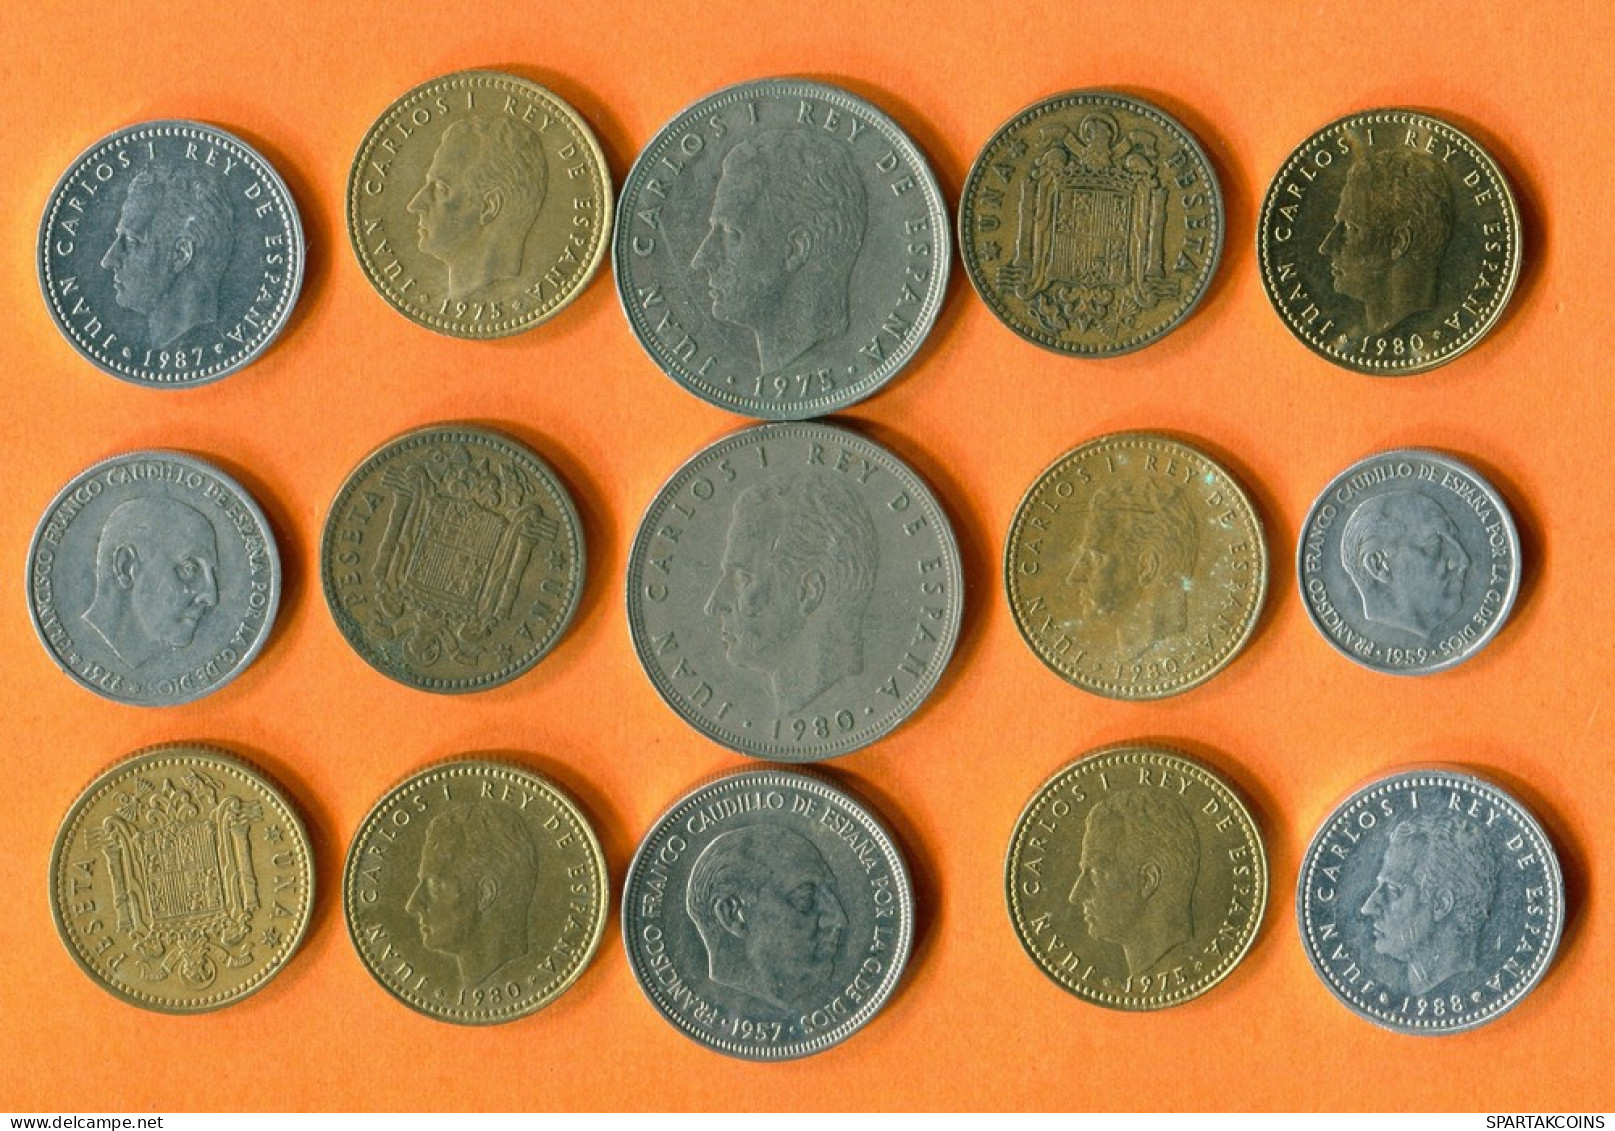 SPAIN Coin SPANISH Coin Collection Mixed Lot #L10235.1.U - Sammlungen